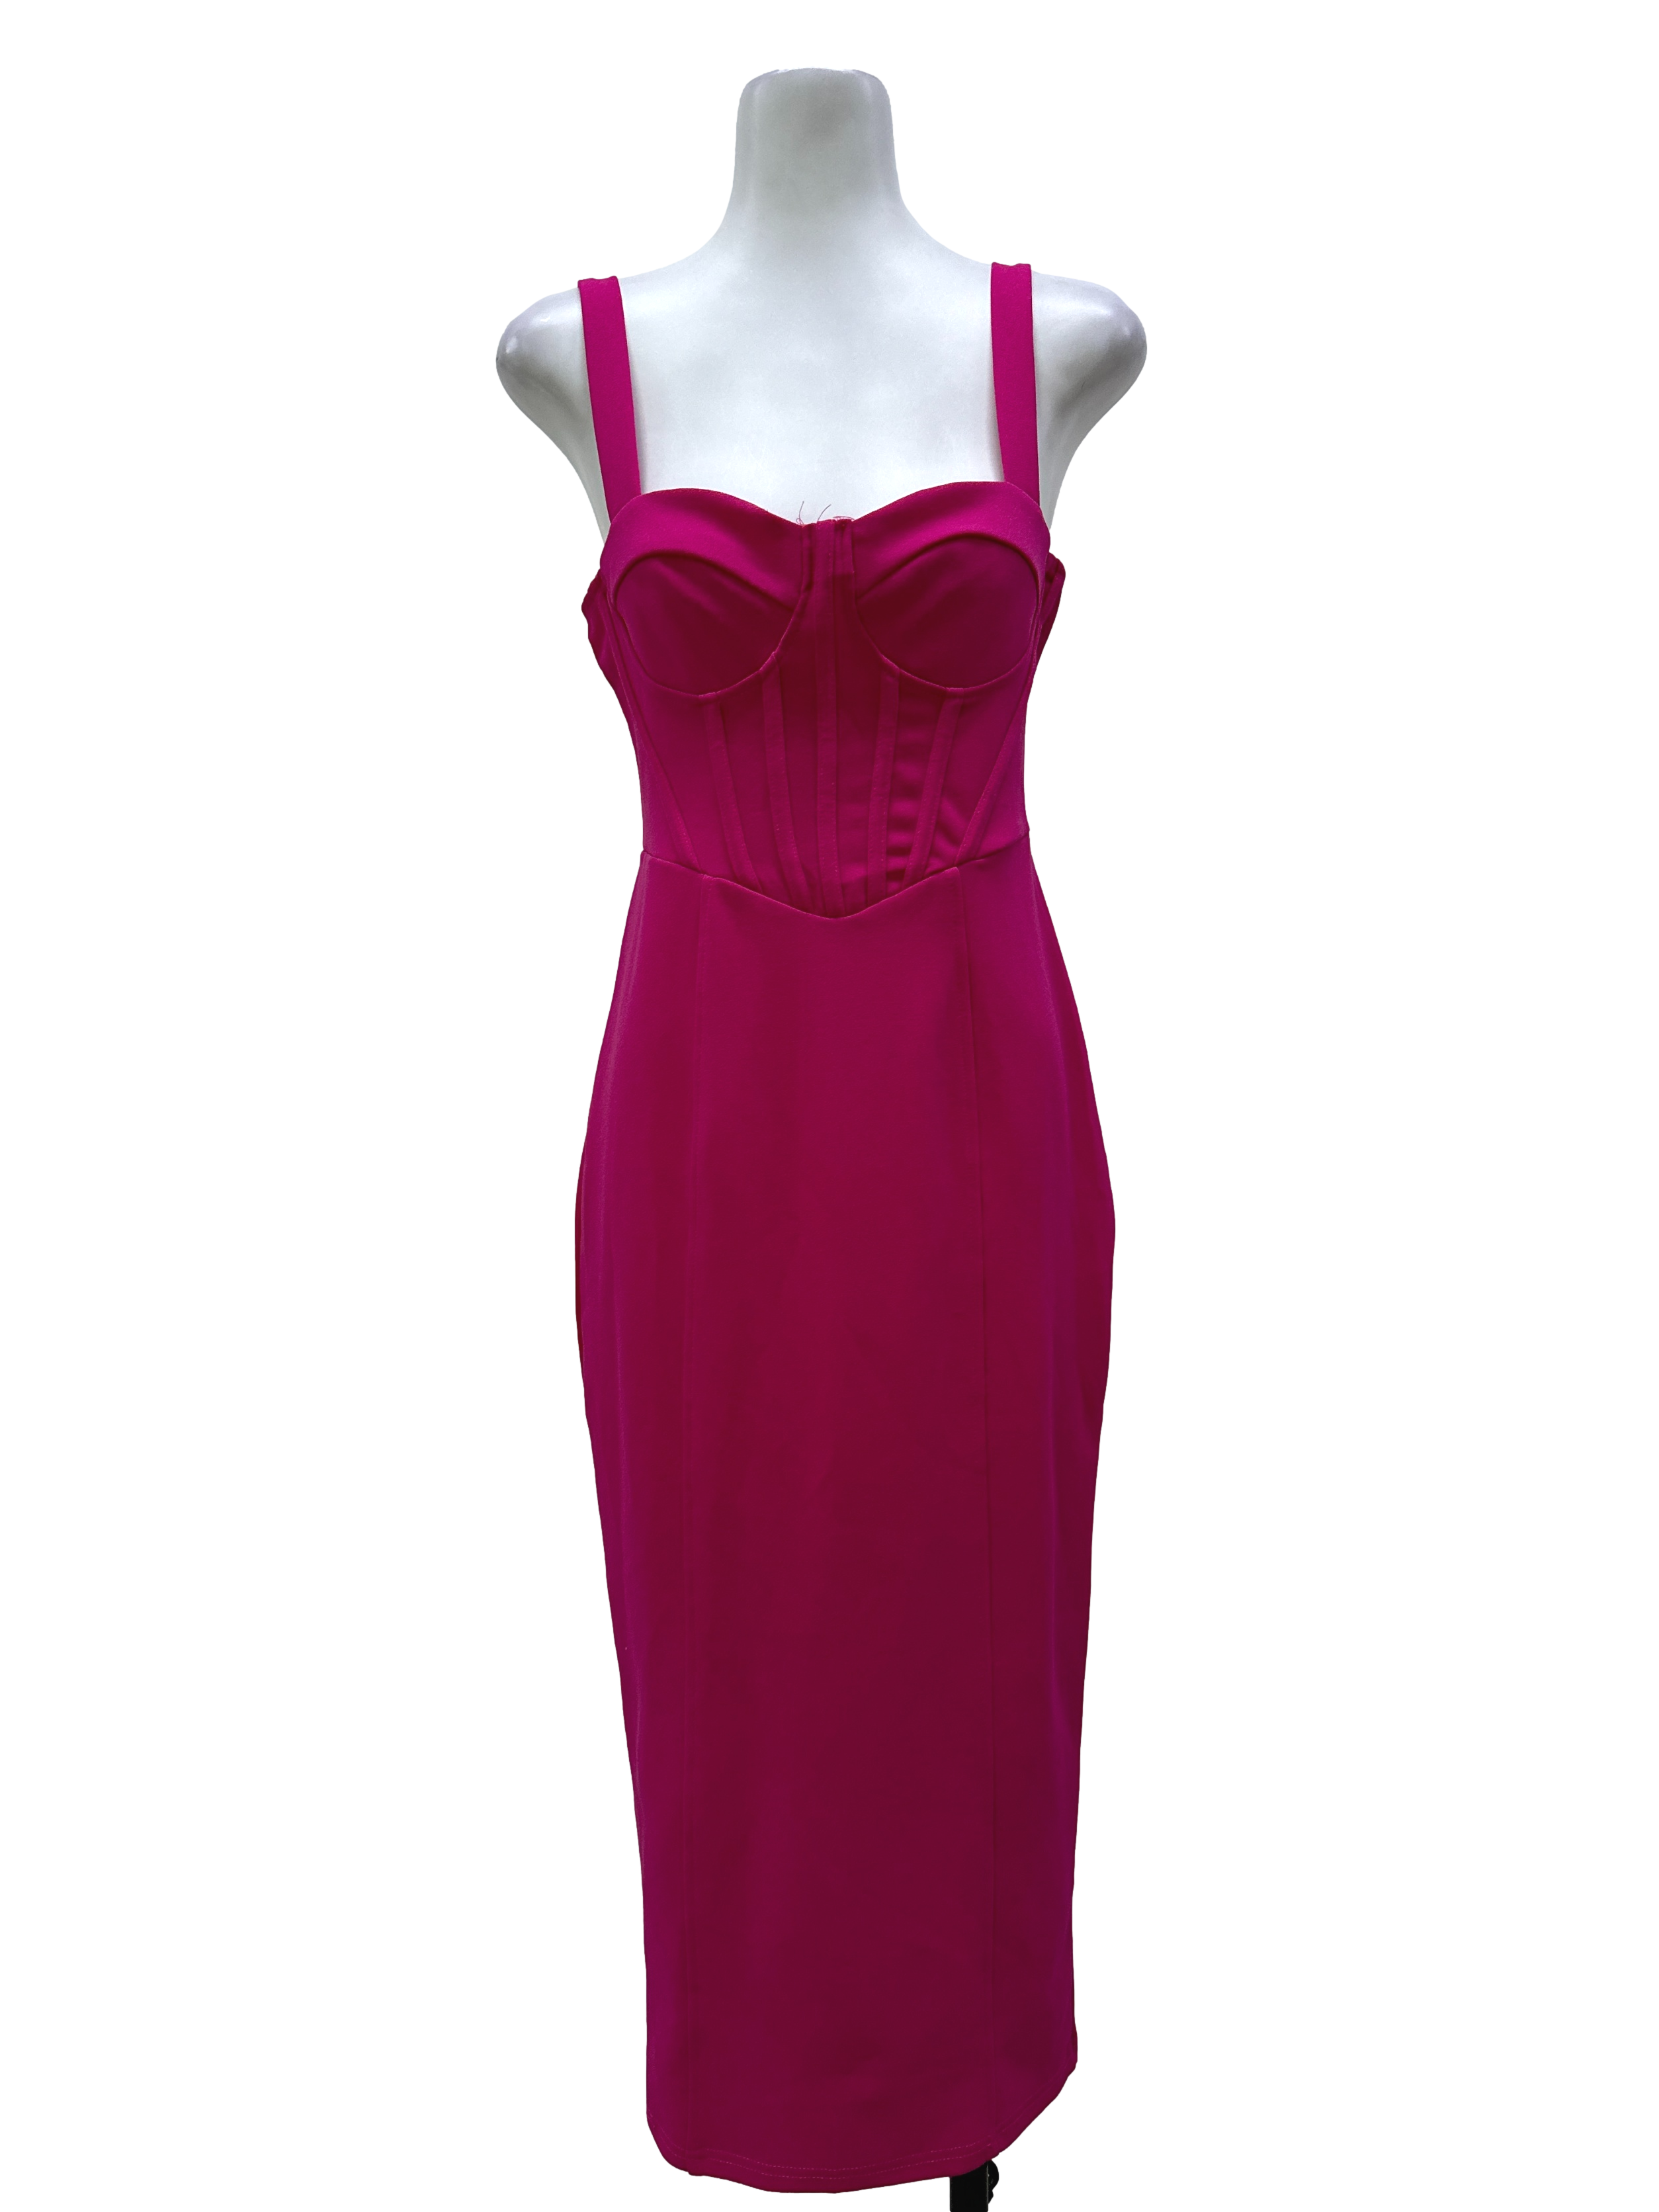 Hot Pink Corset Style Dress